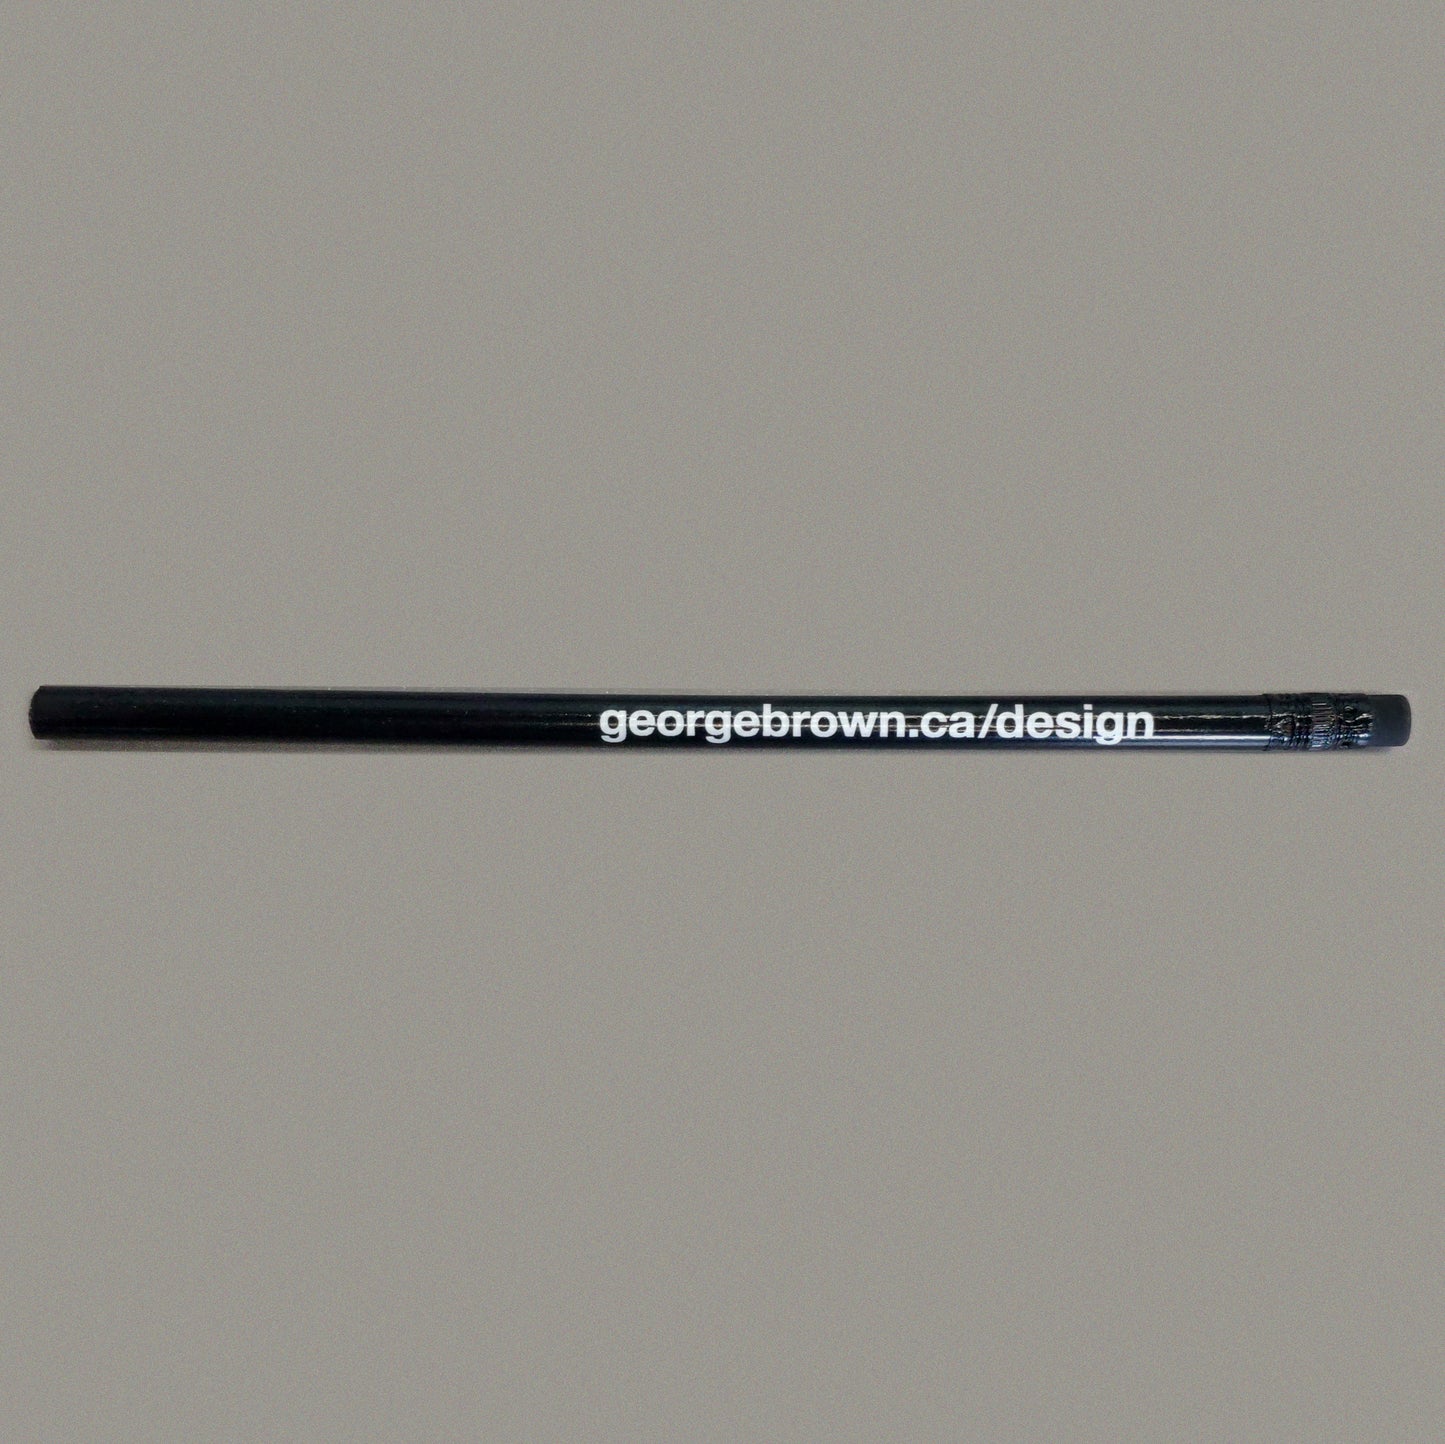 georgebrown.ca/design Pencil